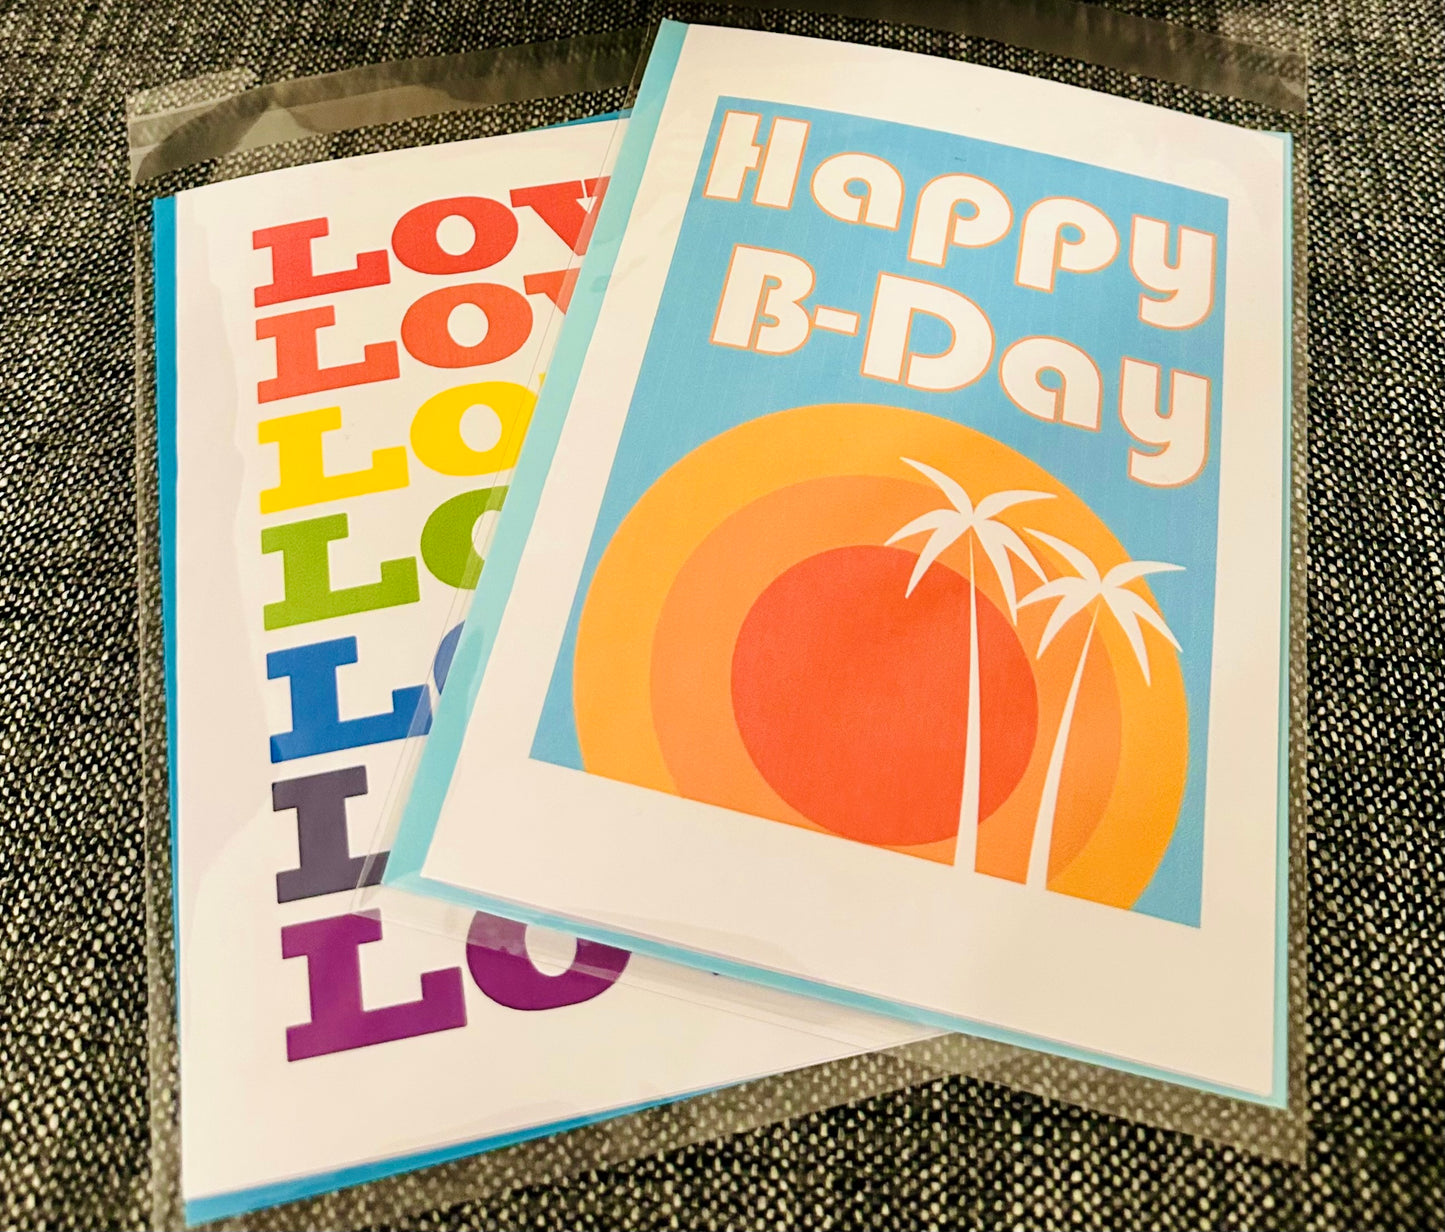 Happy B-Day & Feliz Cumple! 5x7 Tropical sunset Happy Birthday Card English & Spanish